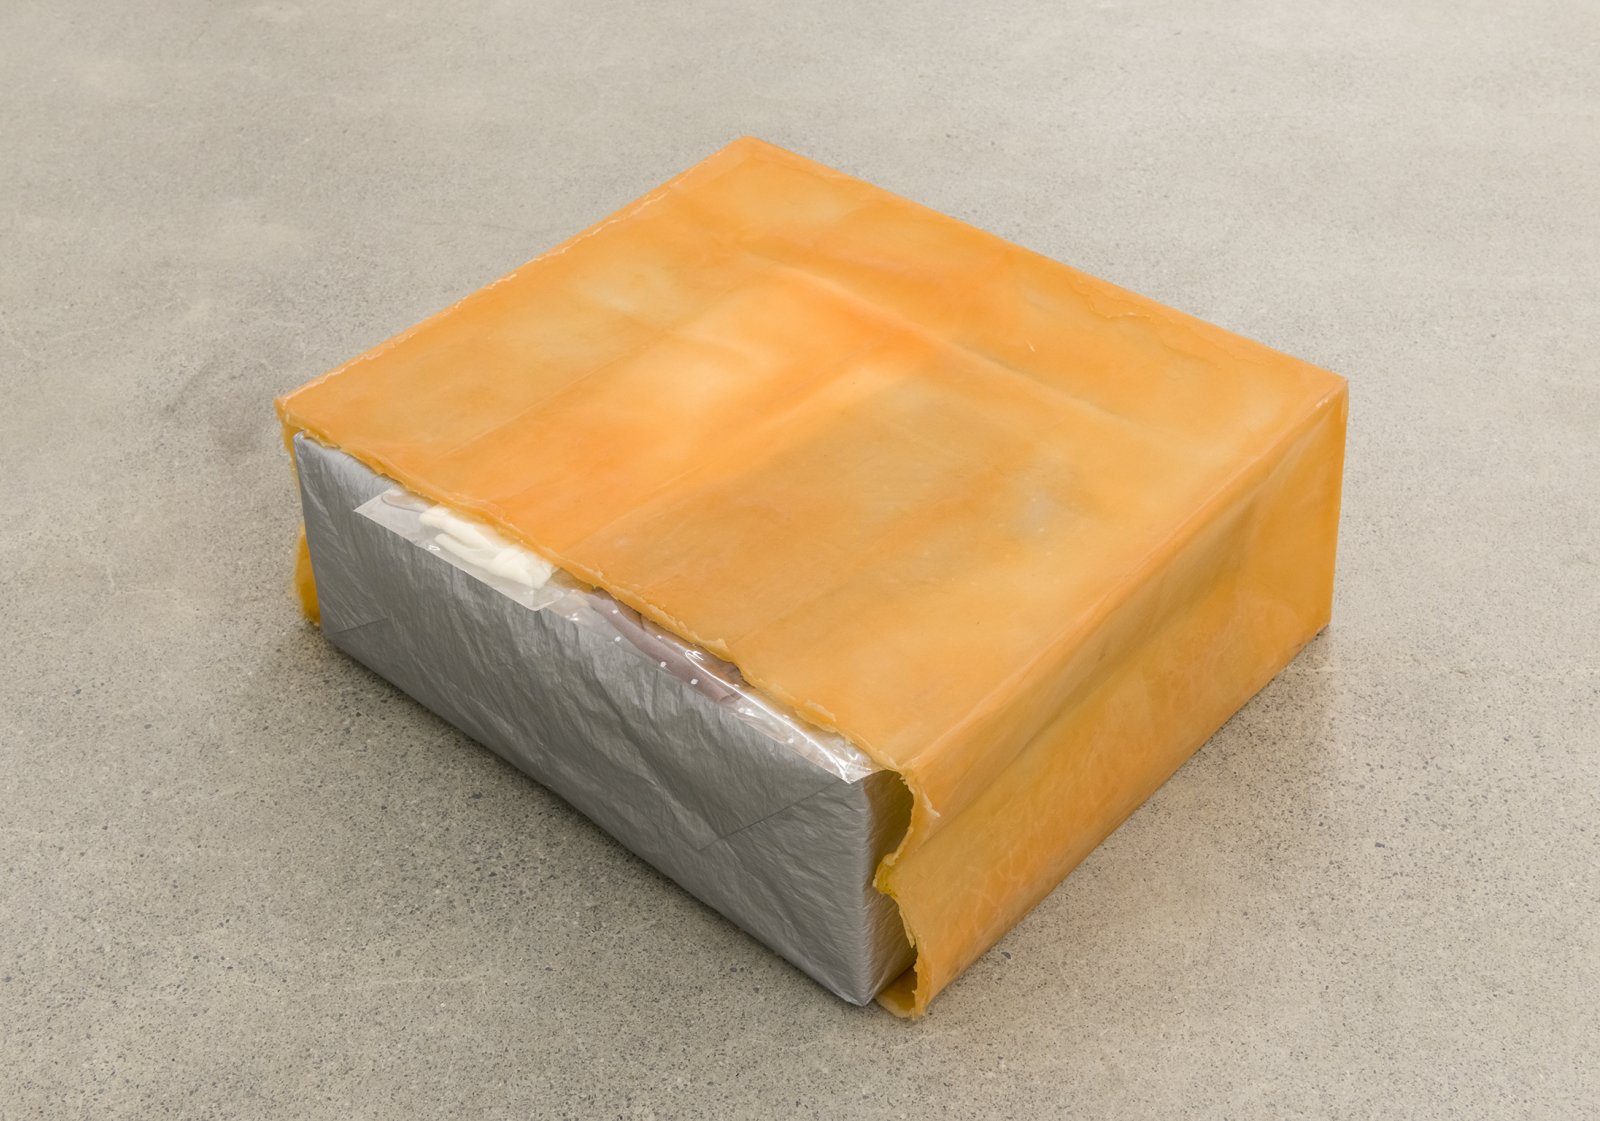 Liz Magor, Hosiery (Tangerine), 2016, silicone rubber, glassine, nylon stockings, 5 x 16 x 15 in. (13 x 41 x 37 cm) by Liz Magor